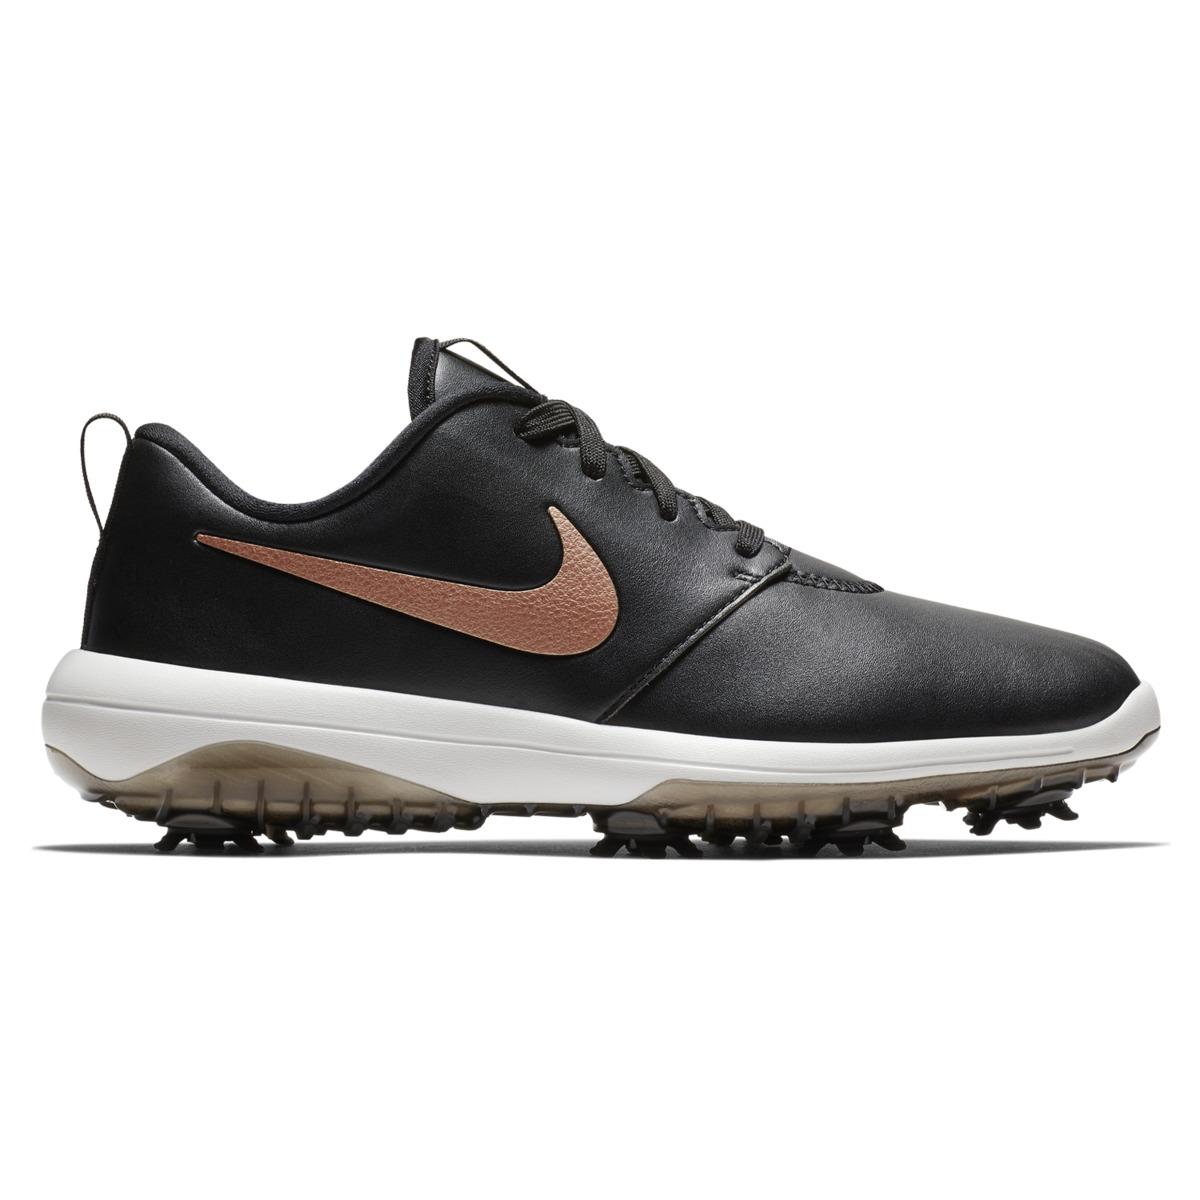 Nike Synthetic Roshe G Tour Golf Shoe in Black - Lyst